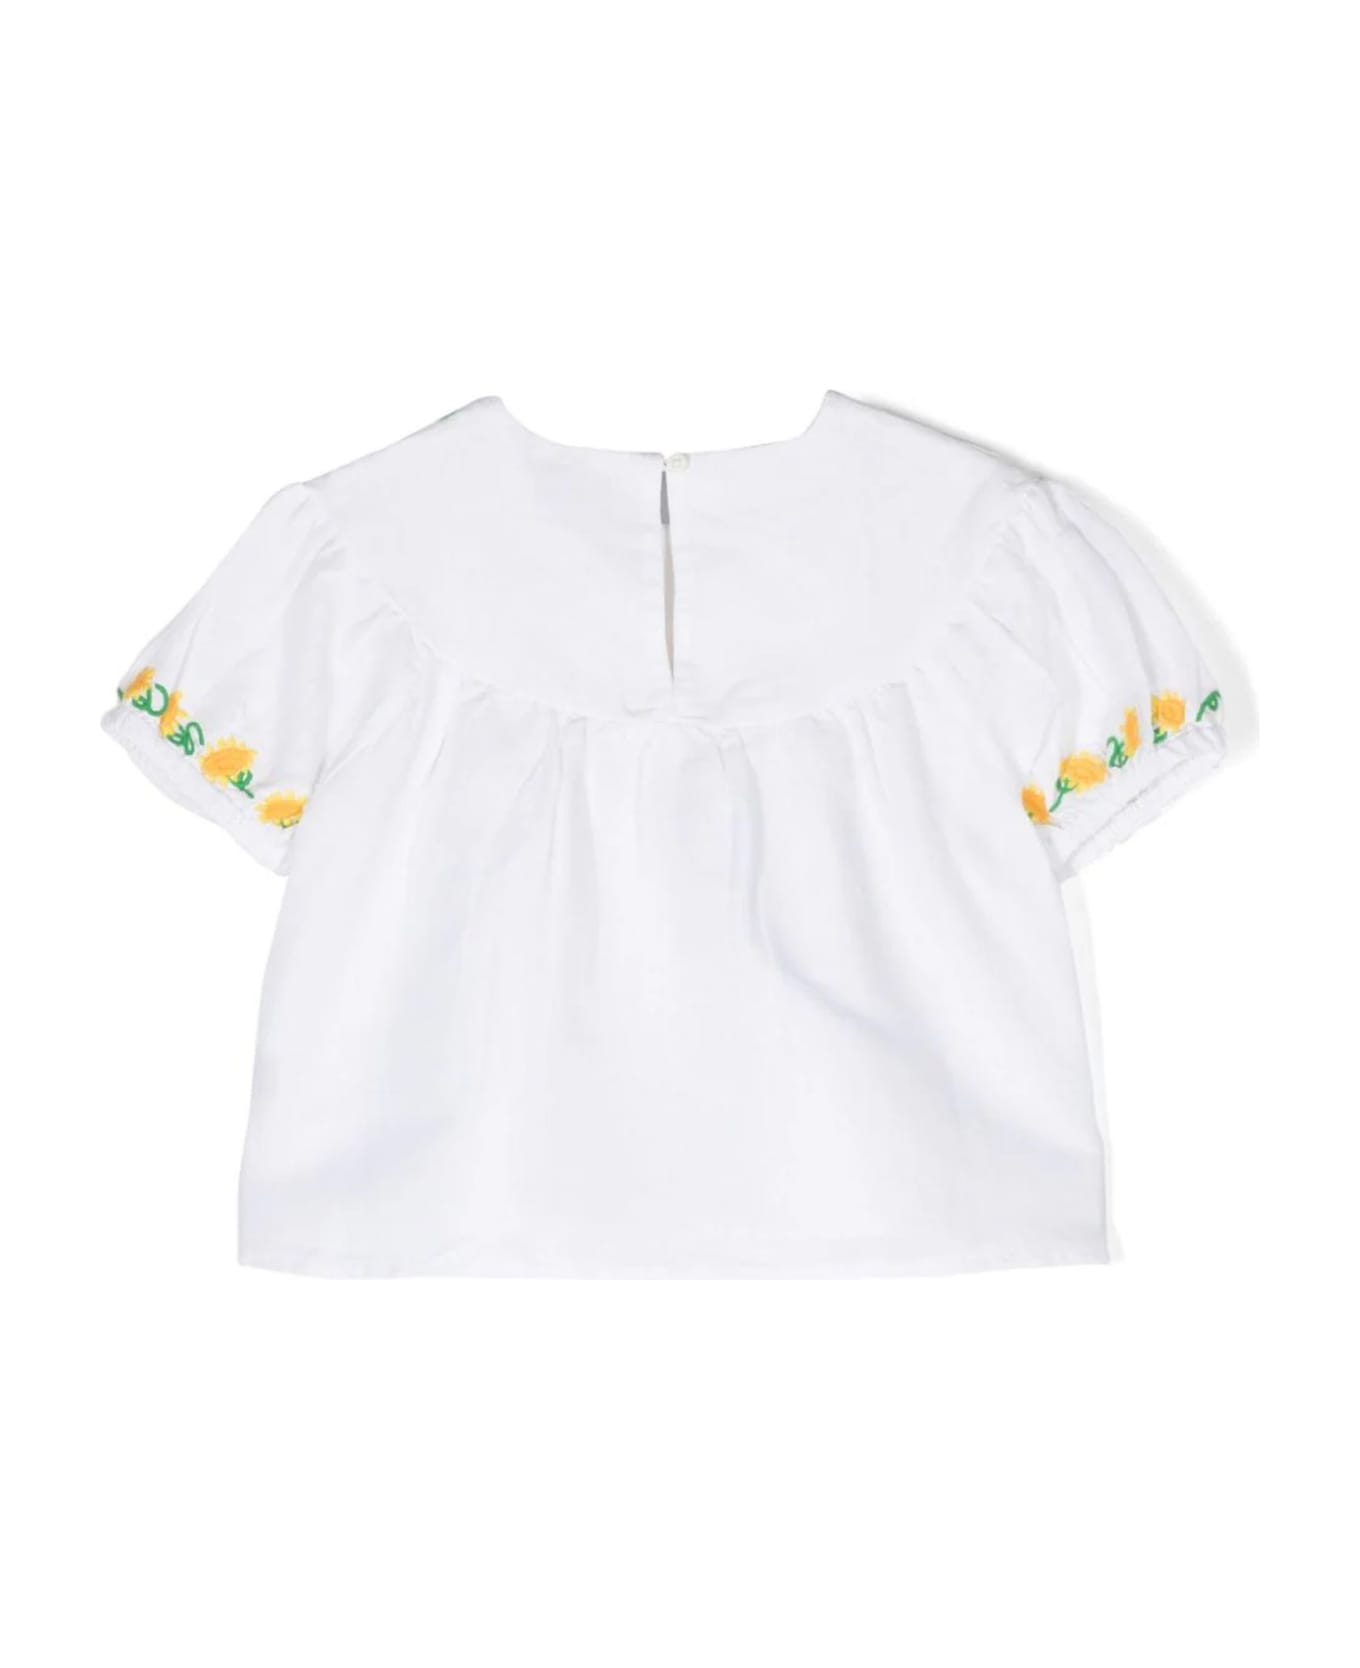 Stella McCartney Kids Shirts White - White